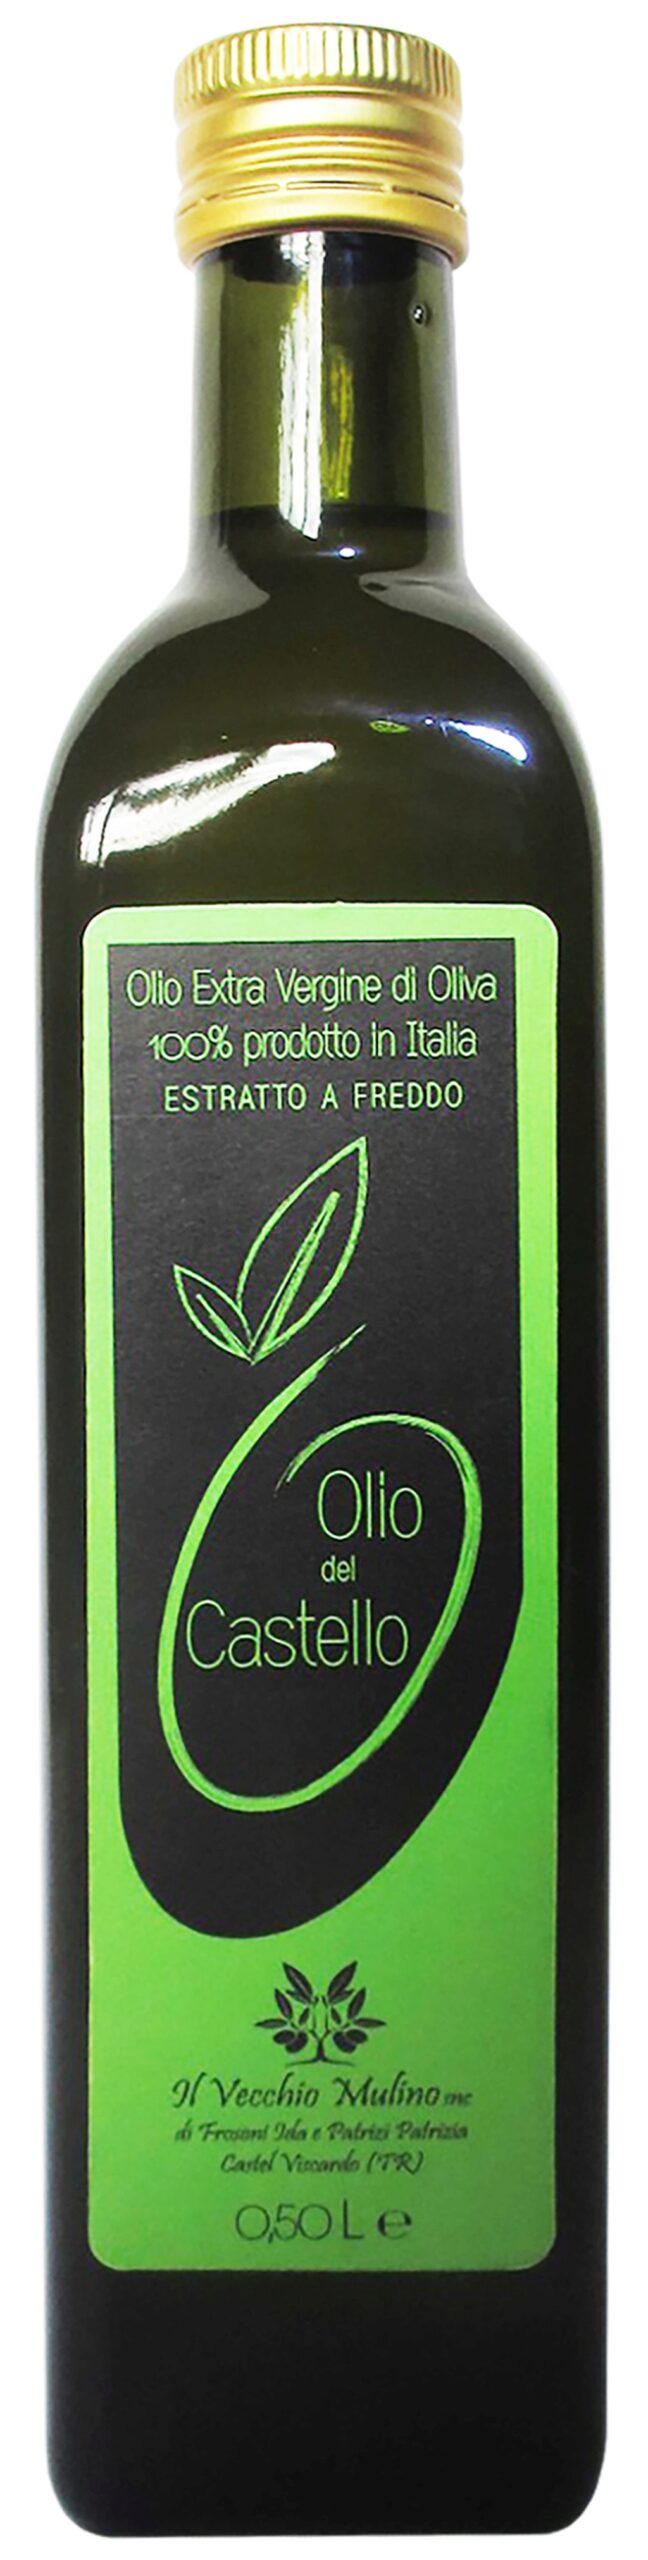 Olio Extravergine di Oliva Bottiglia 0.50L, bottiglia olio, olio evo